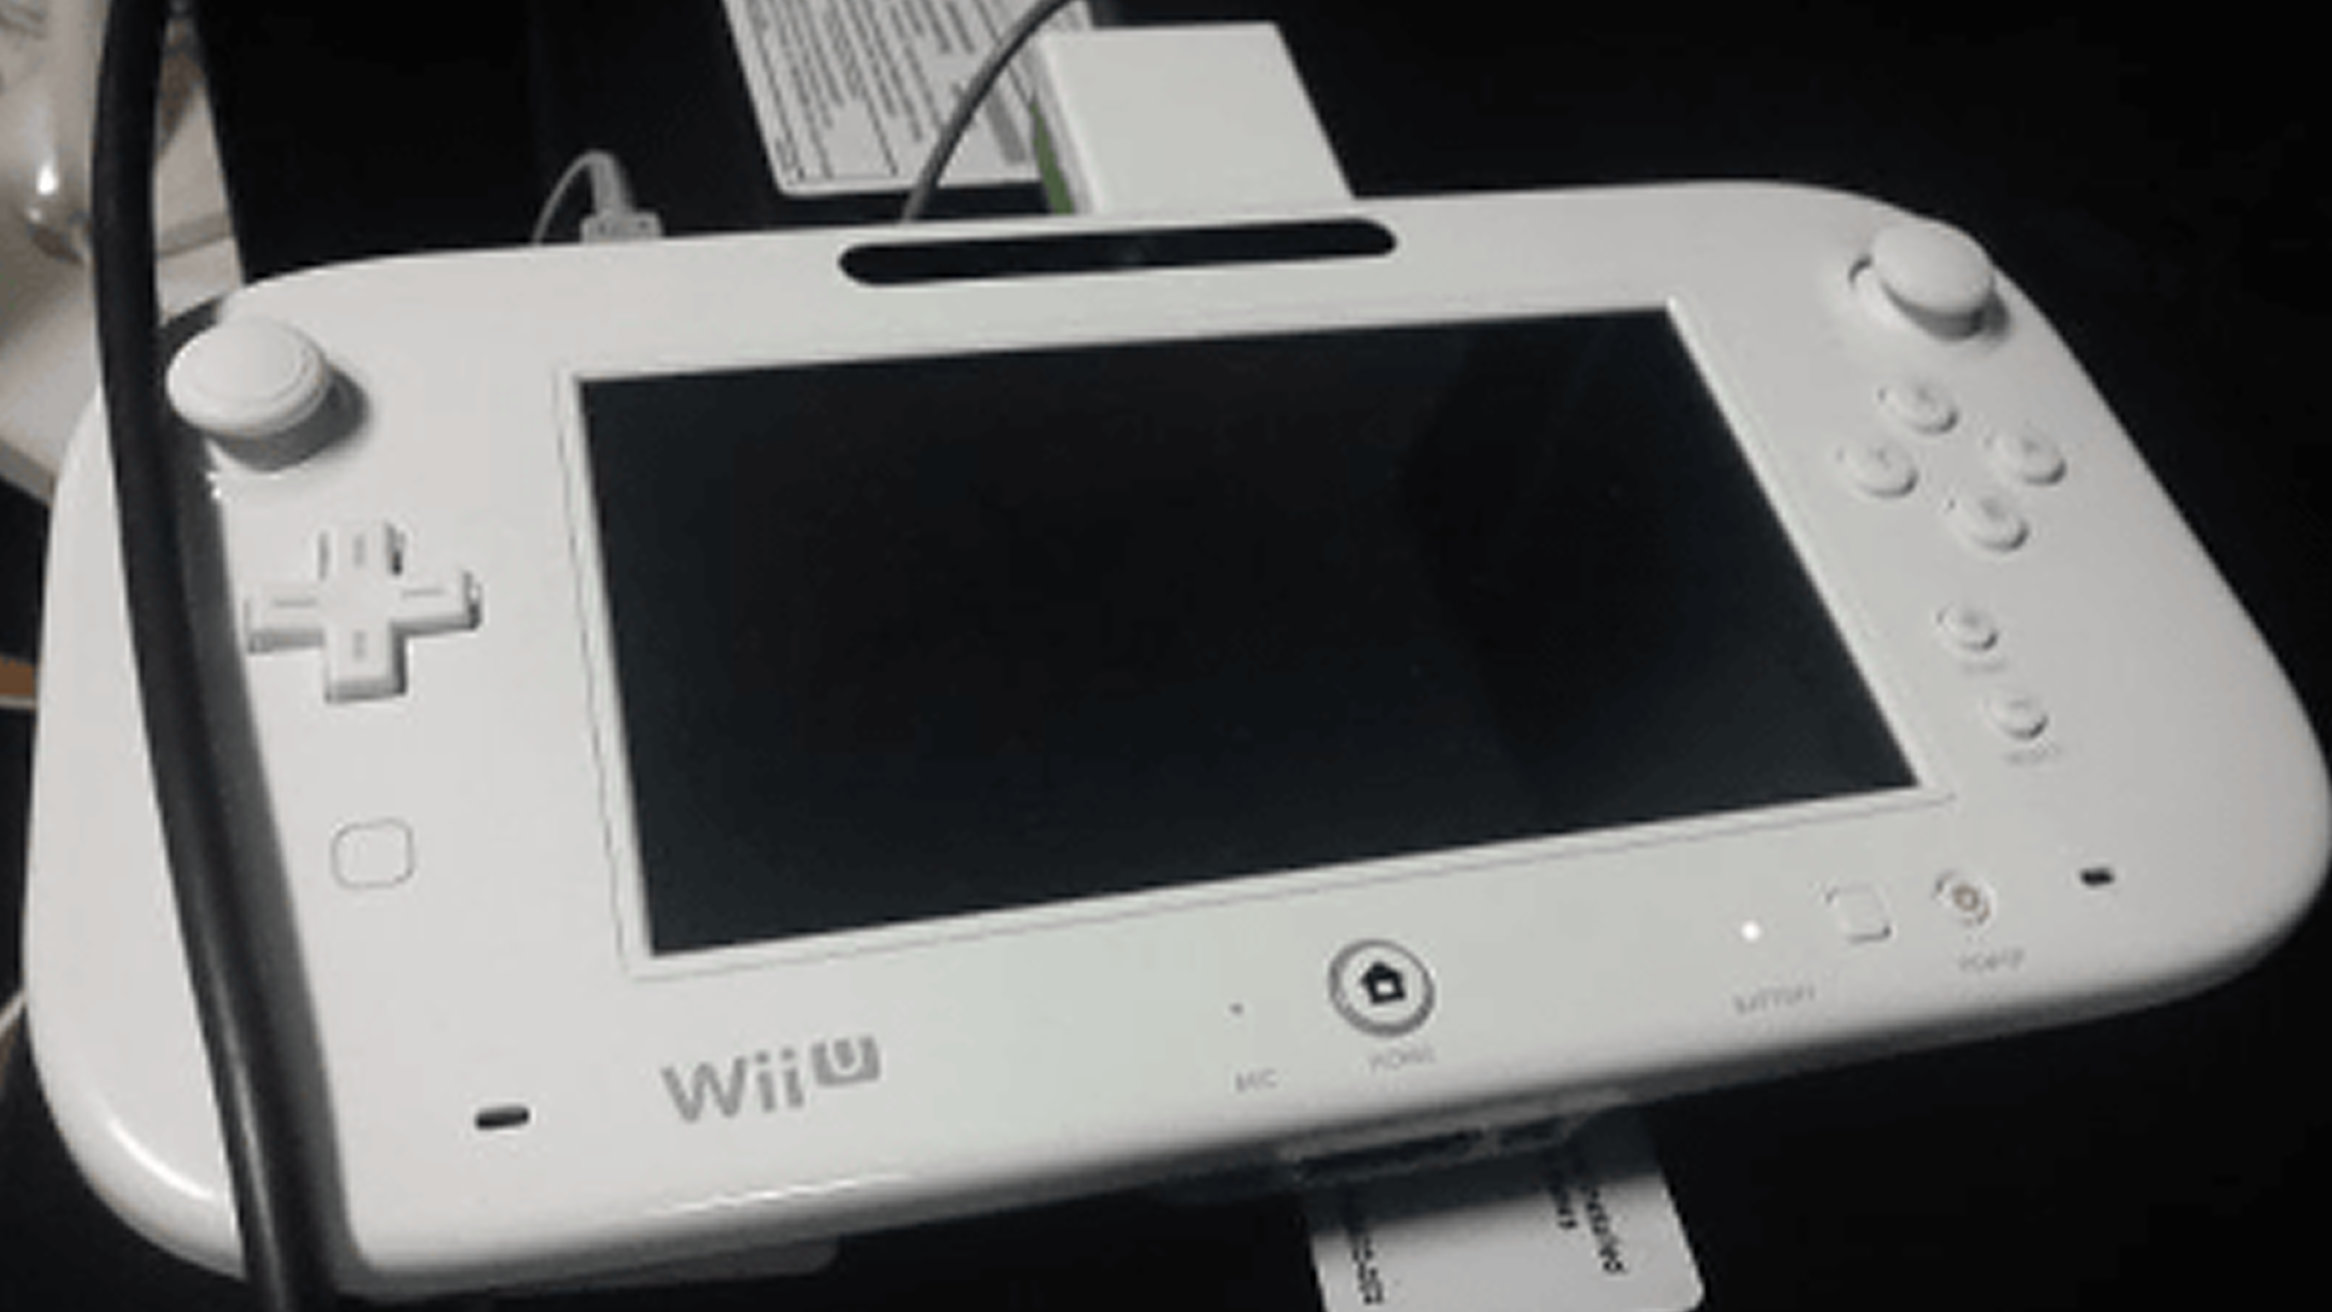 Wii Uコントローラーの新デザイン版に、NFCセンサーと謎のボタン